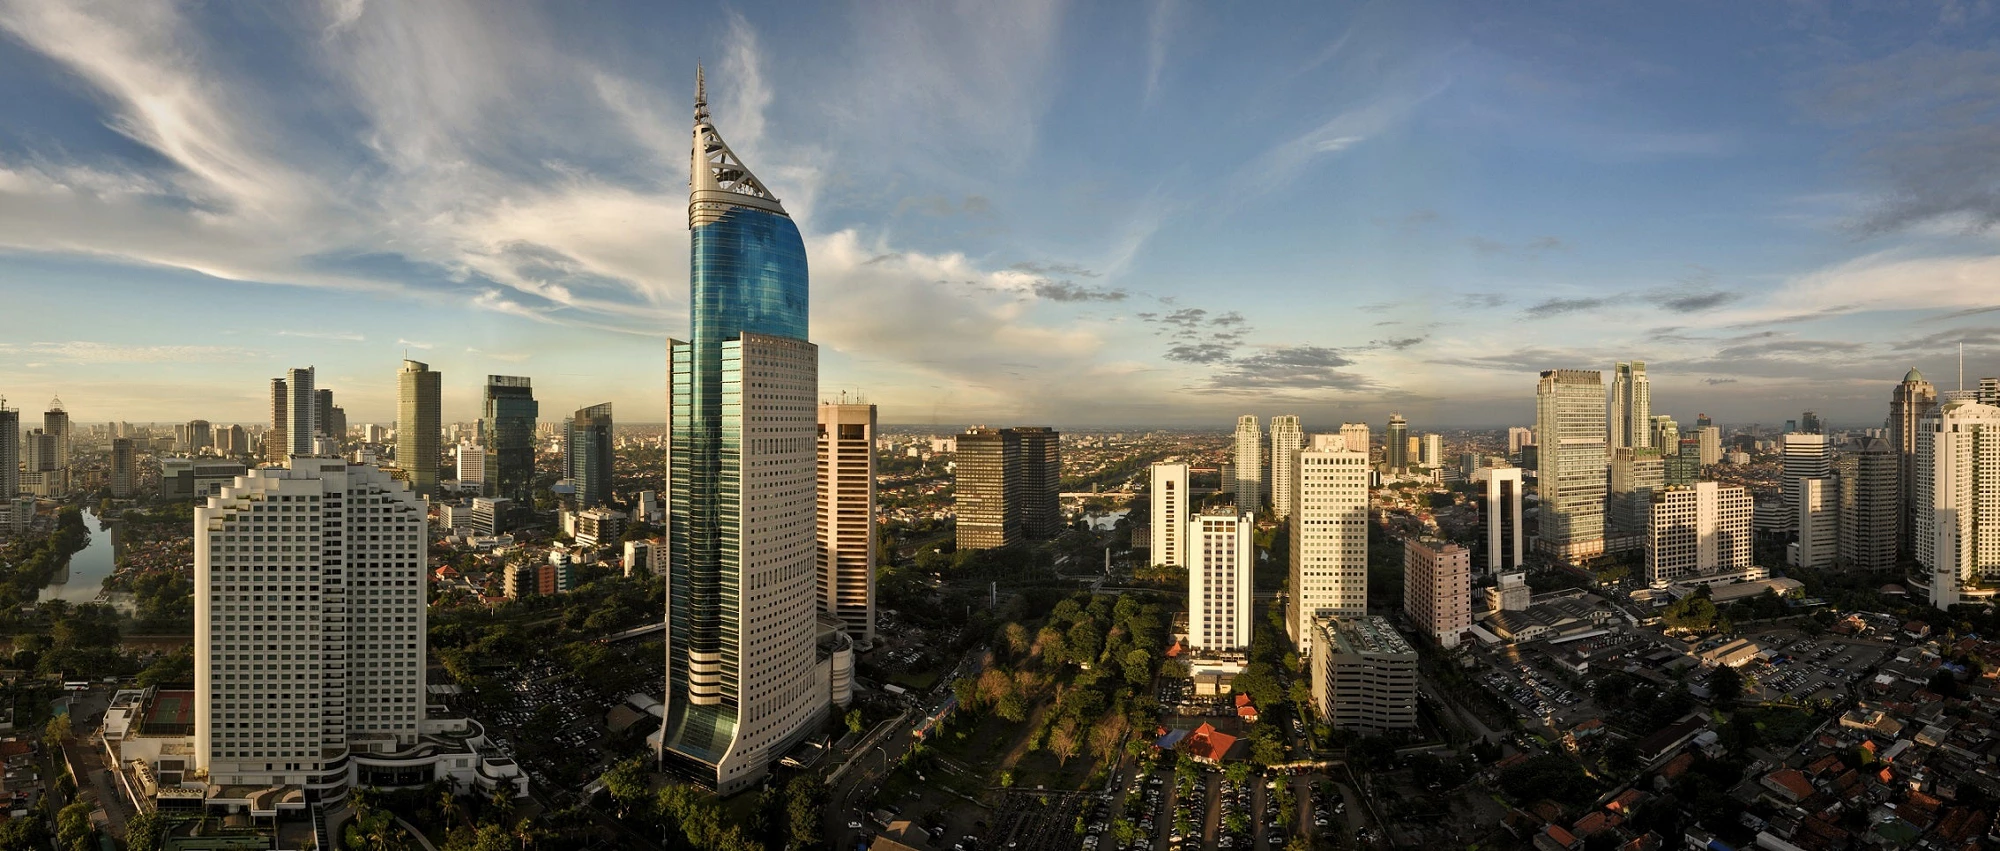 Jakarta City Skyline. Photo by © [Daxiao Production] / Adobe Stock